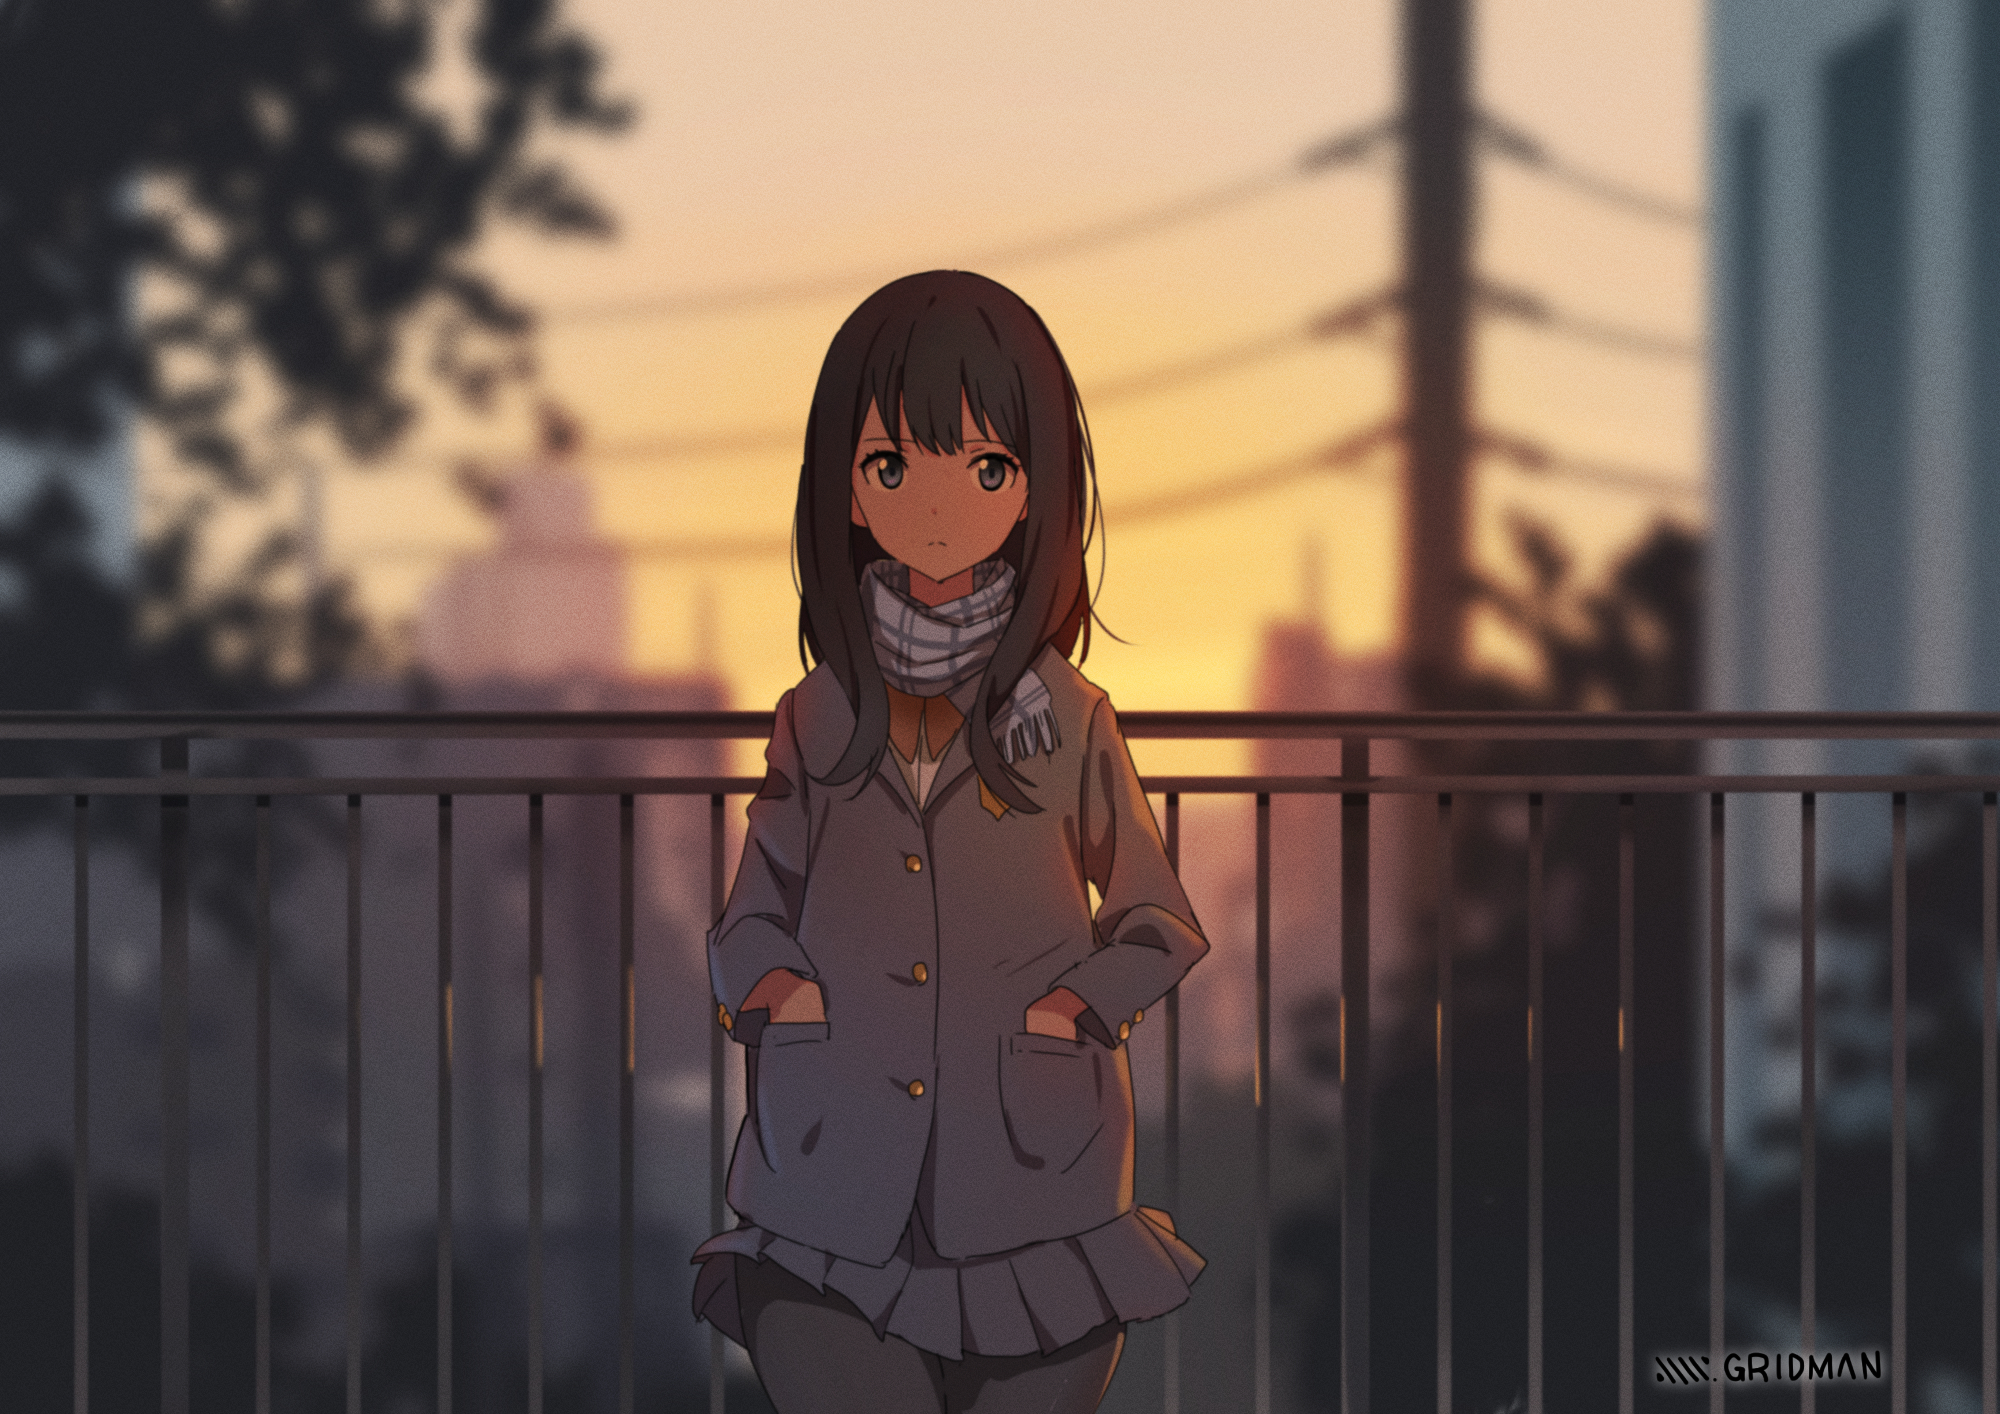 Anime Anime Girls Sunset SSSS GRiDMAN Takarada Rikka Moescape 2000x1414